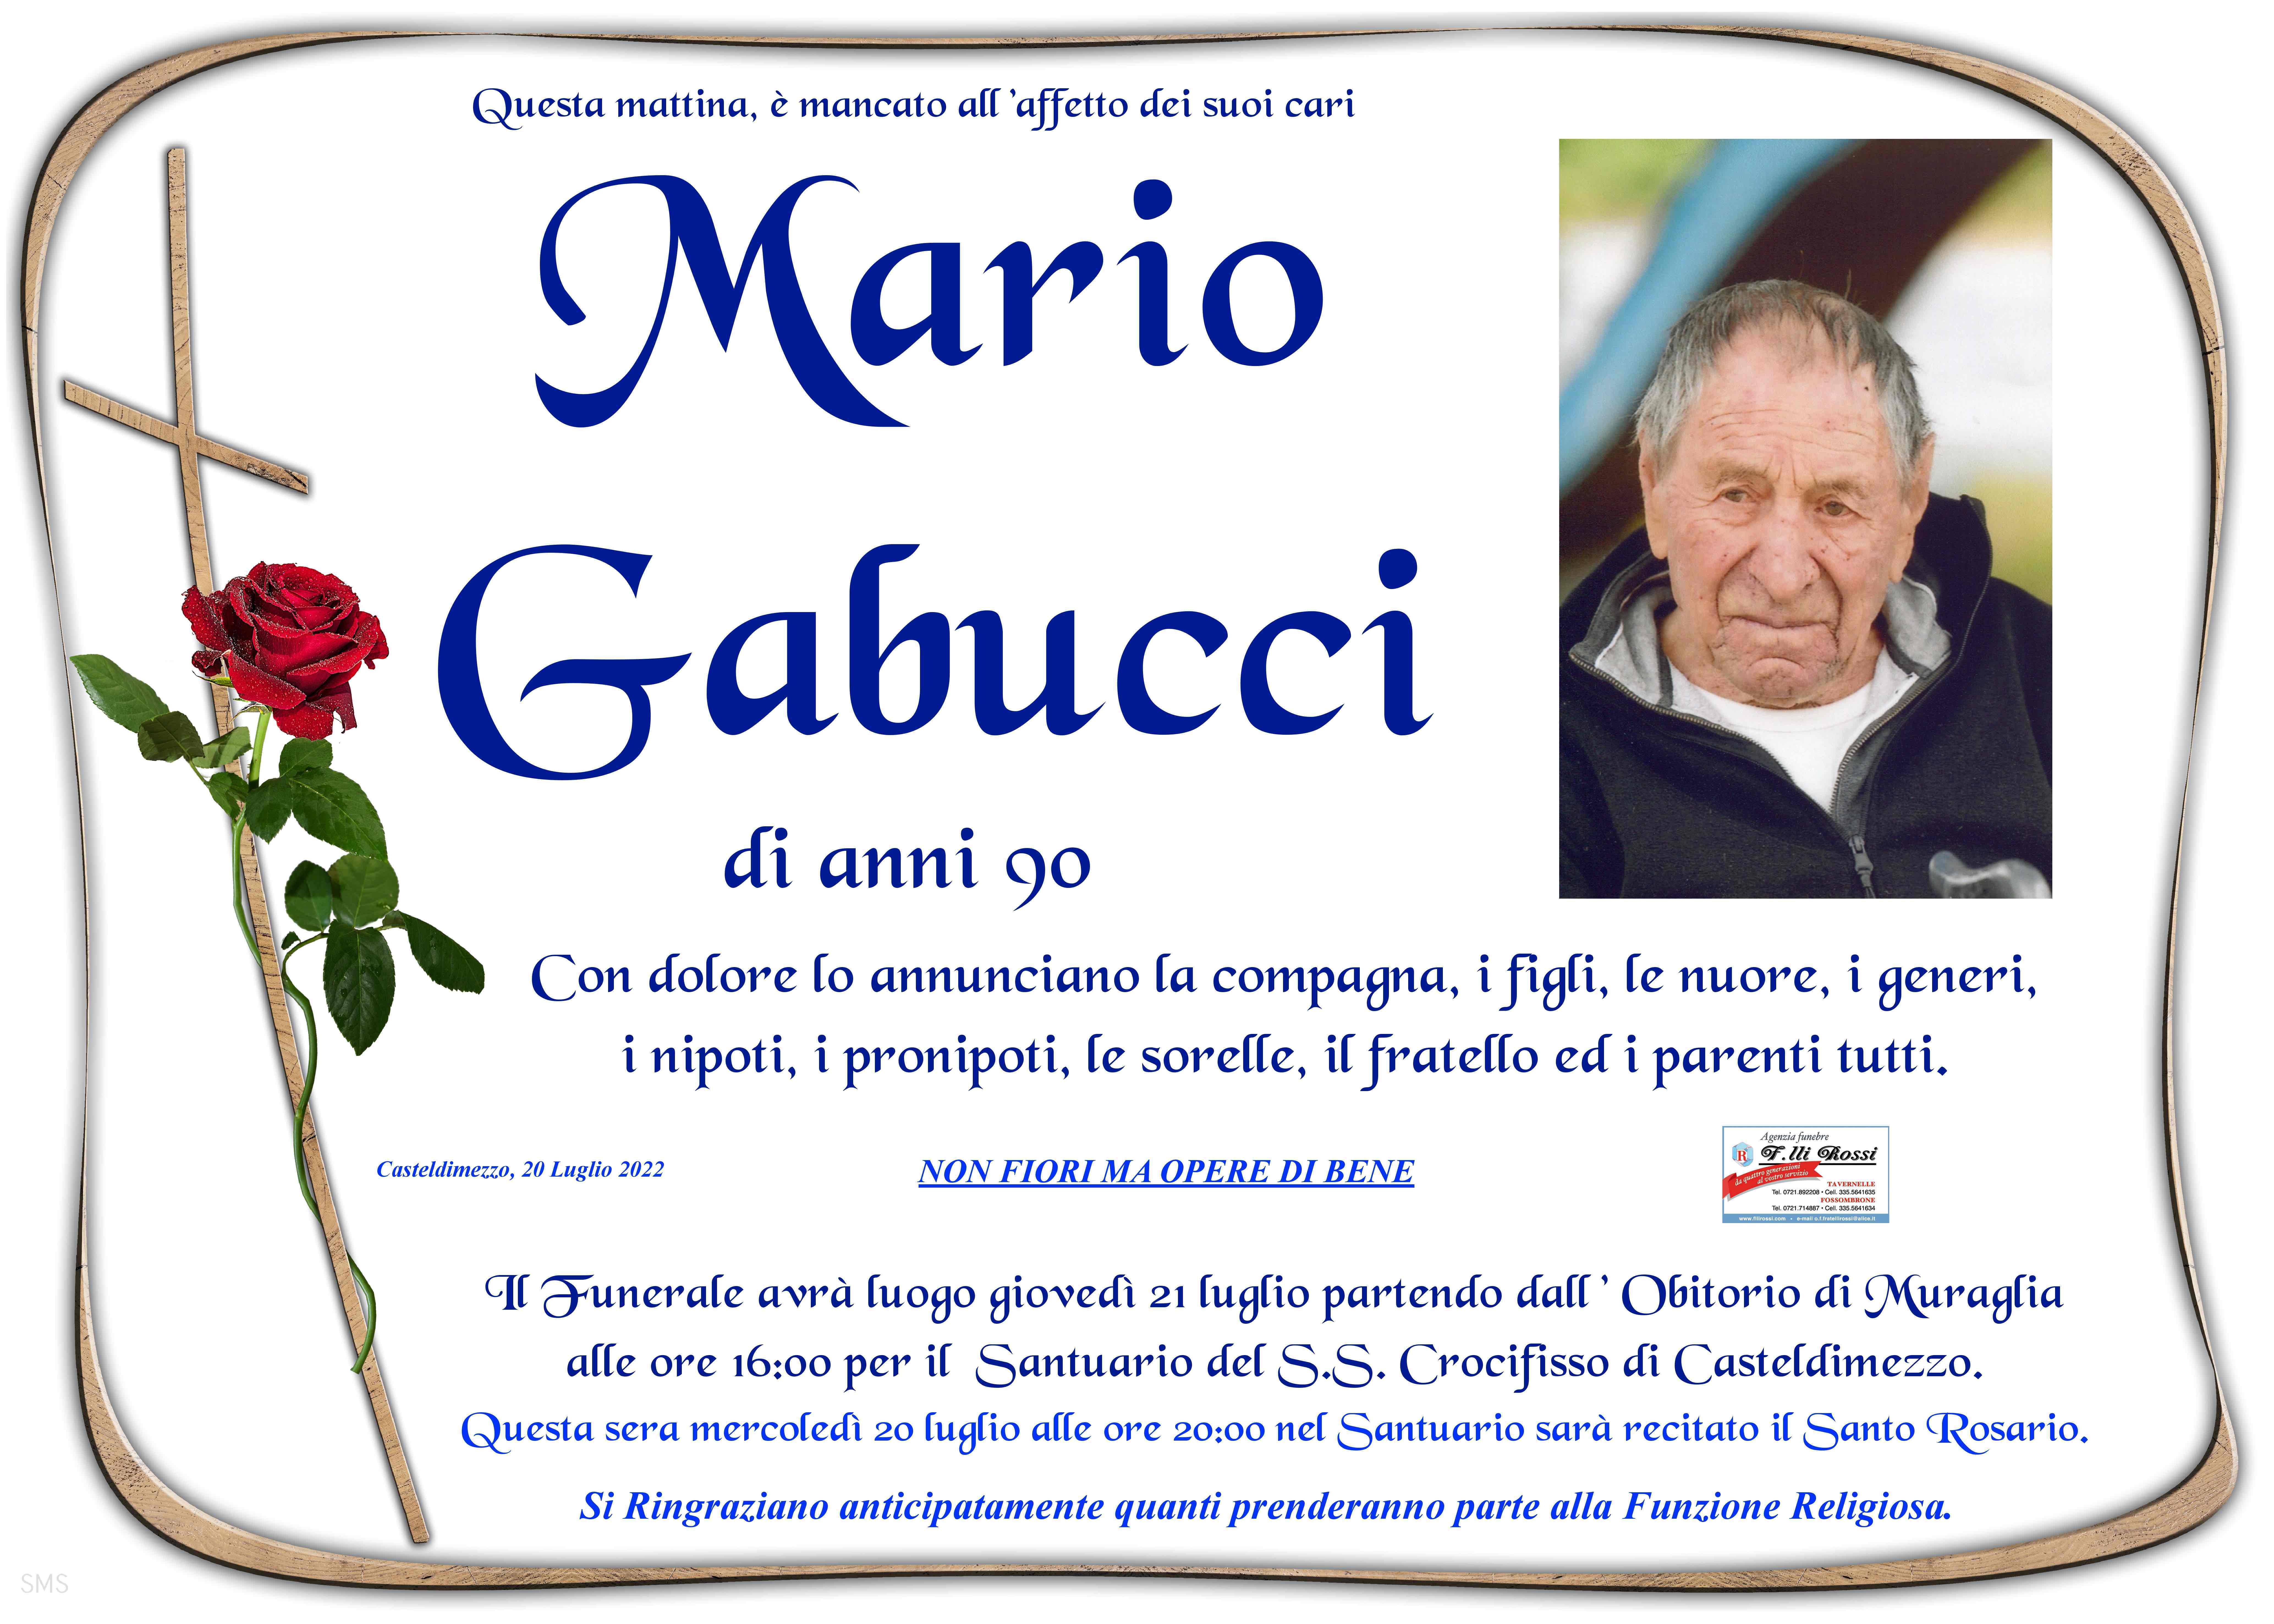 Mario Gabucci